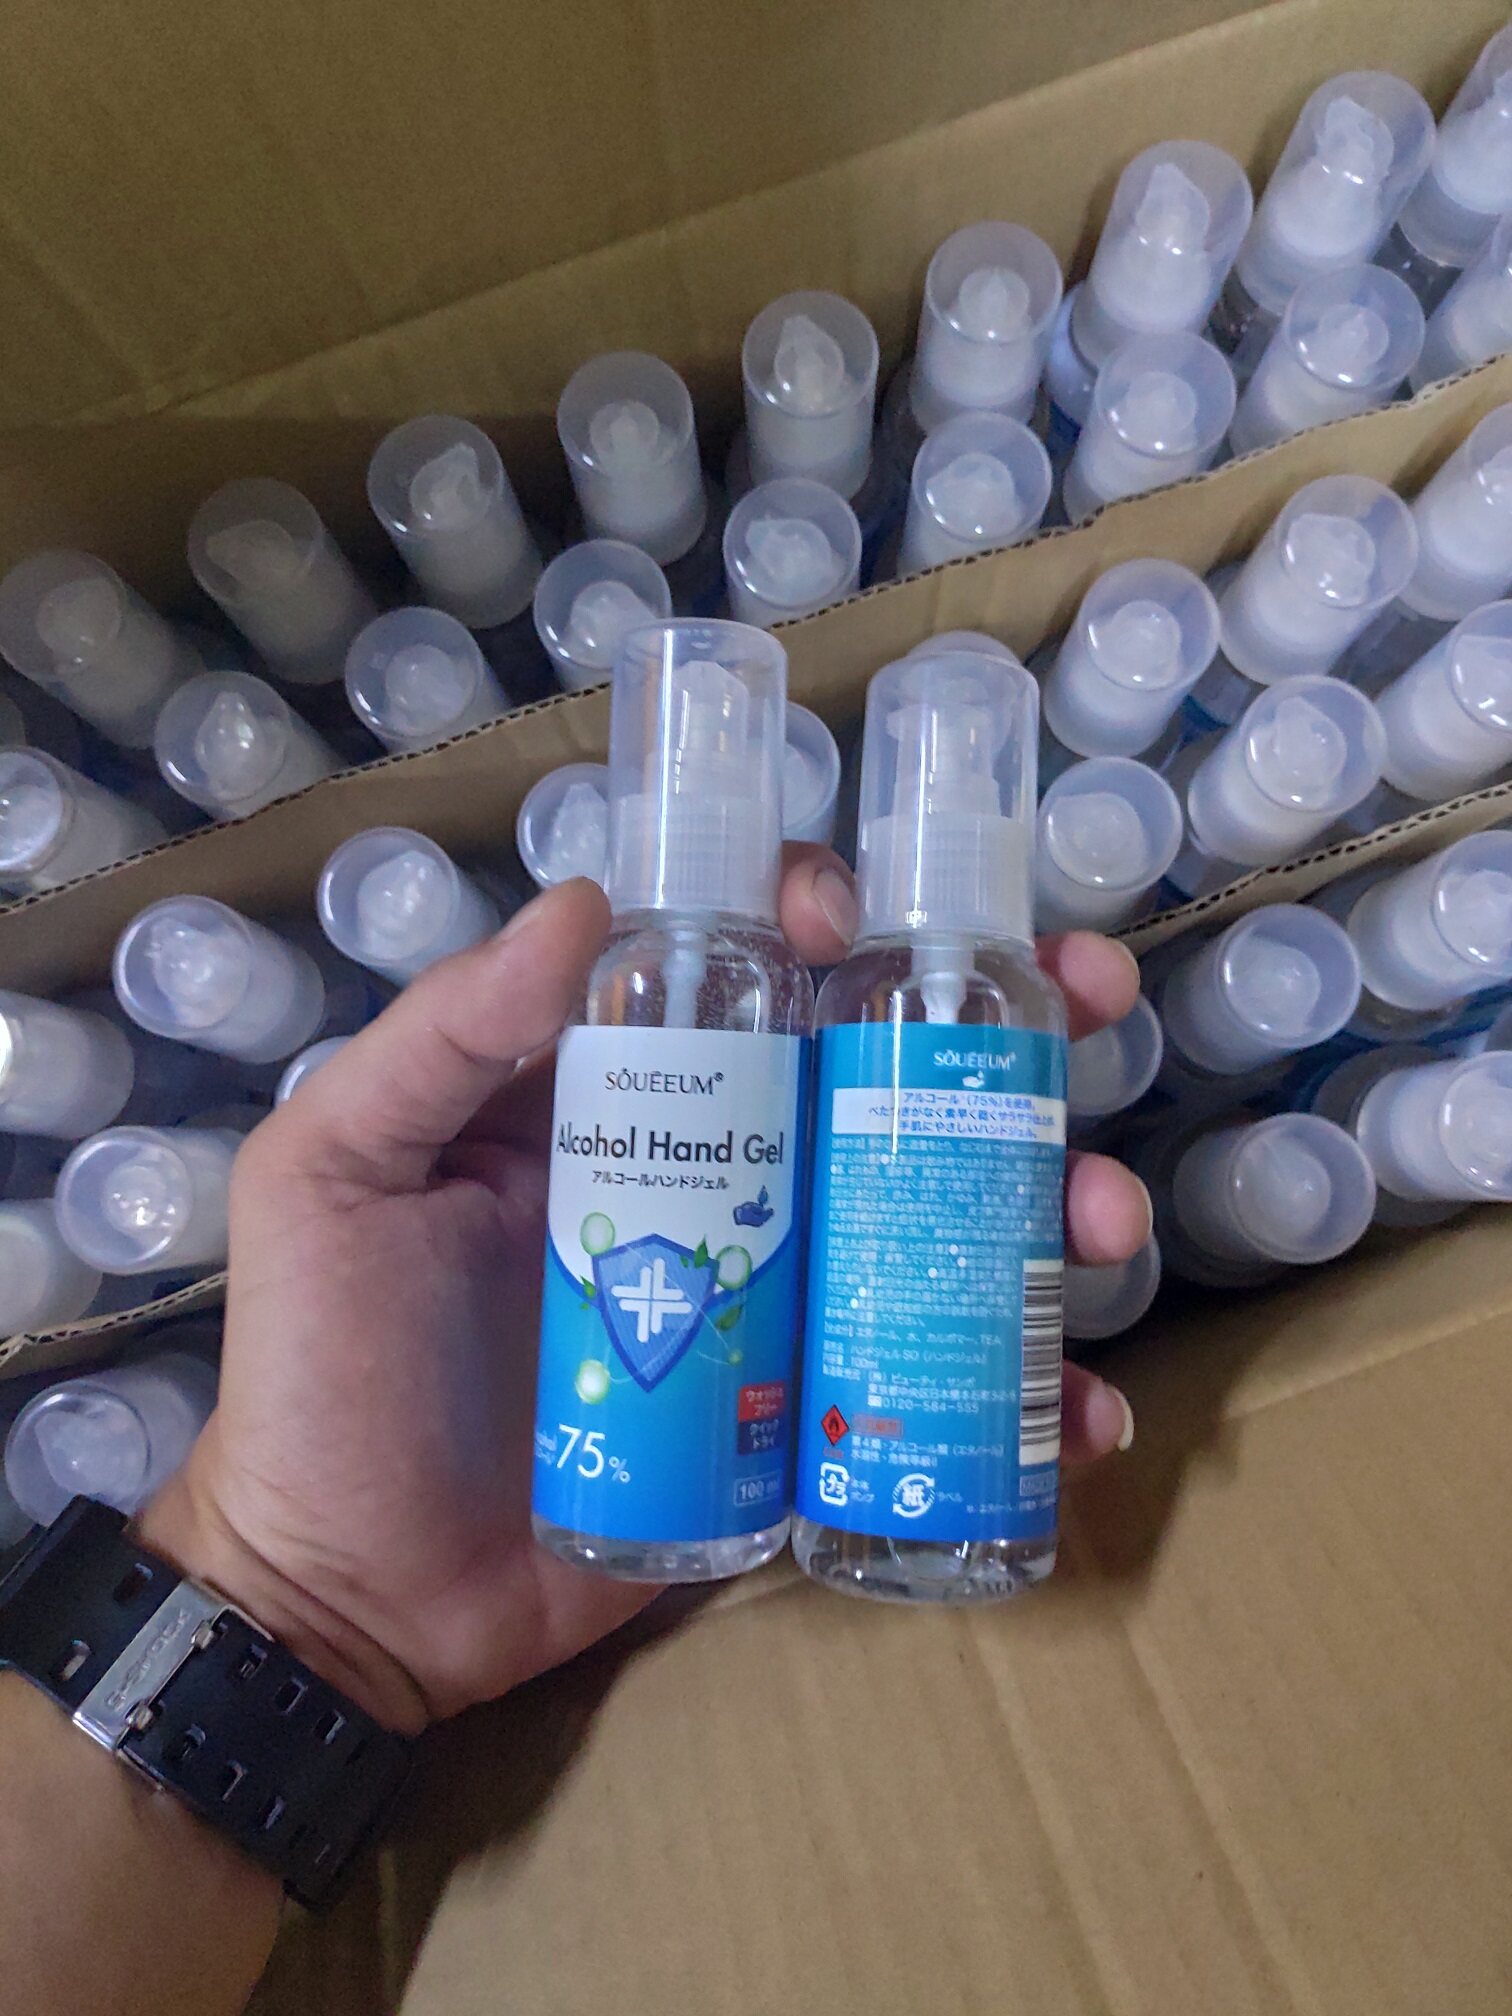 (Ready Stock) Soueeum Alcohol Hand Gel Hand Sanitizer Gel 100ml 75% Alcohol Water Base Sanitiser Gel